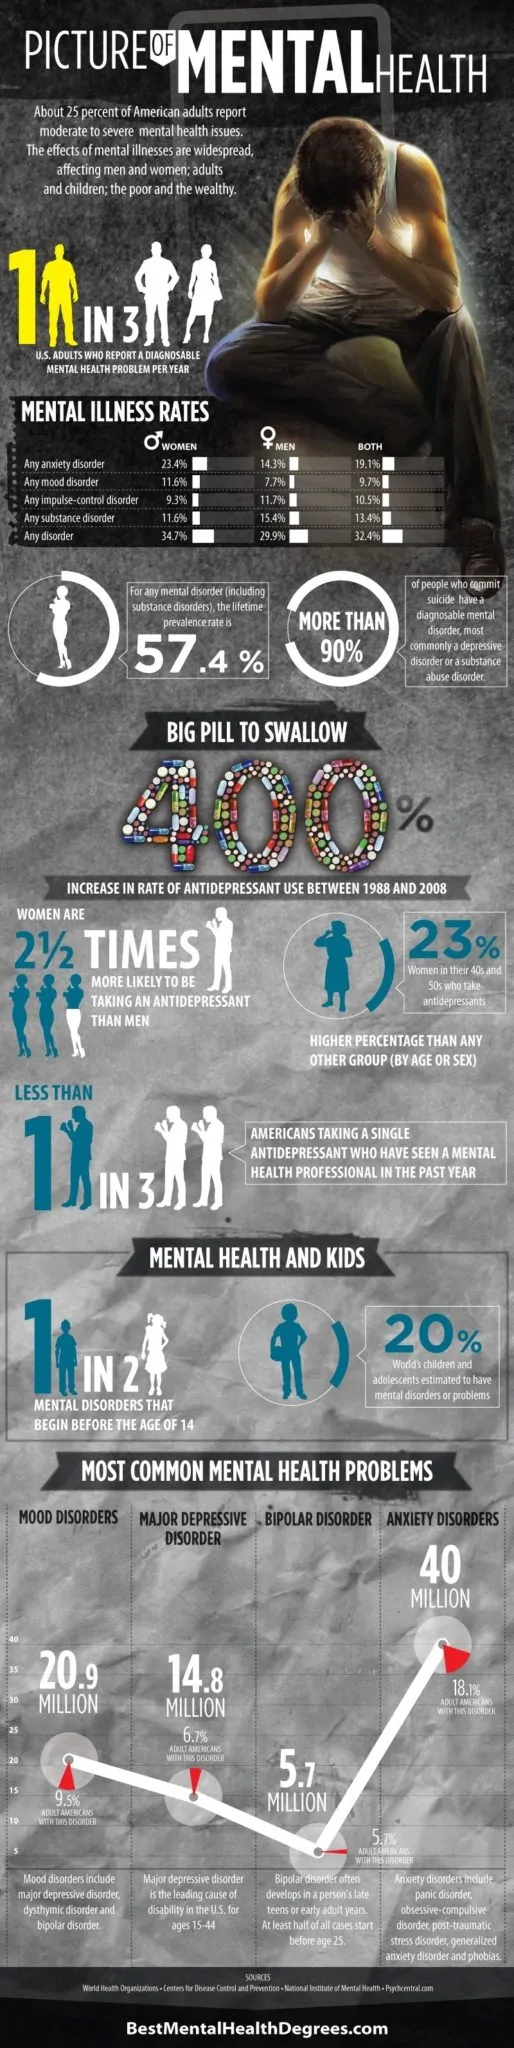 mental illness mental health infographic